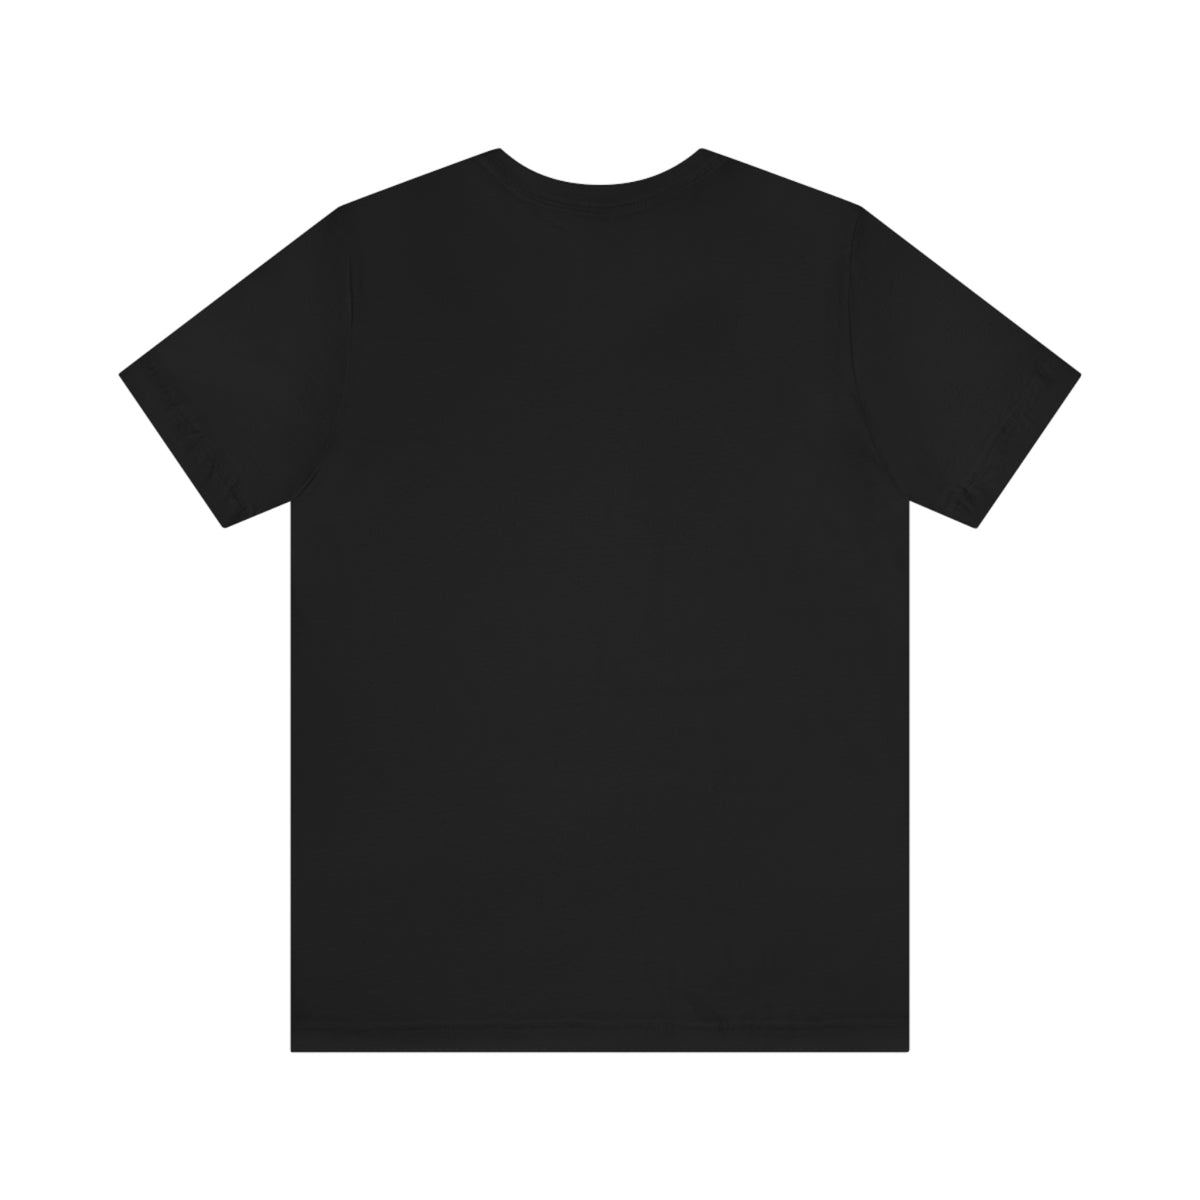 FREE SHRUGS Unisex T-Shirt